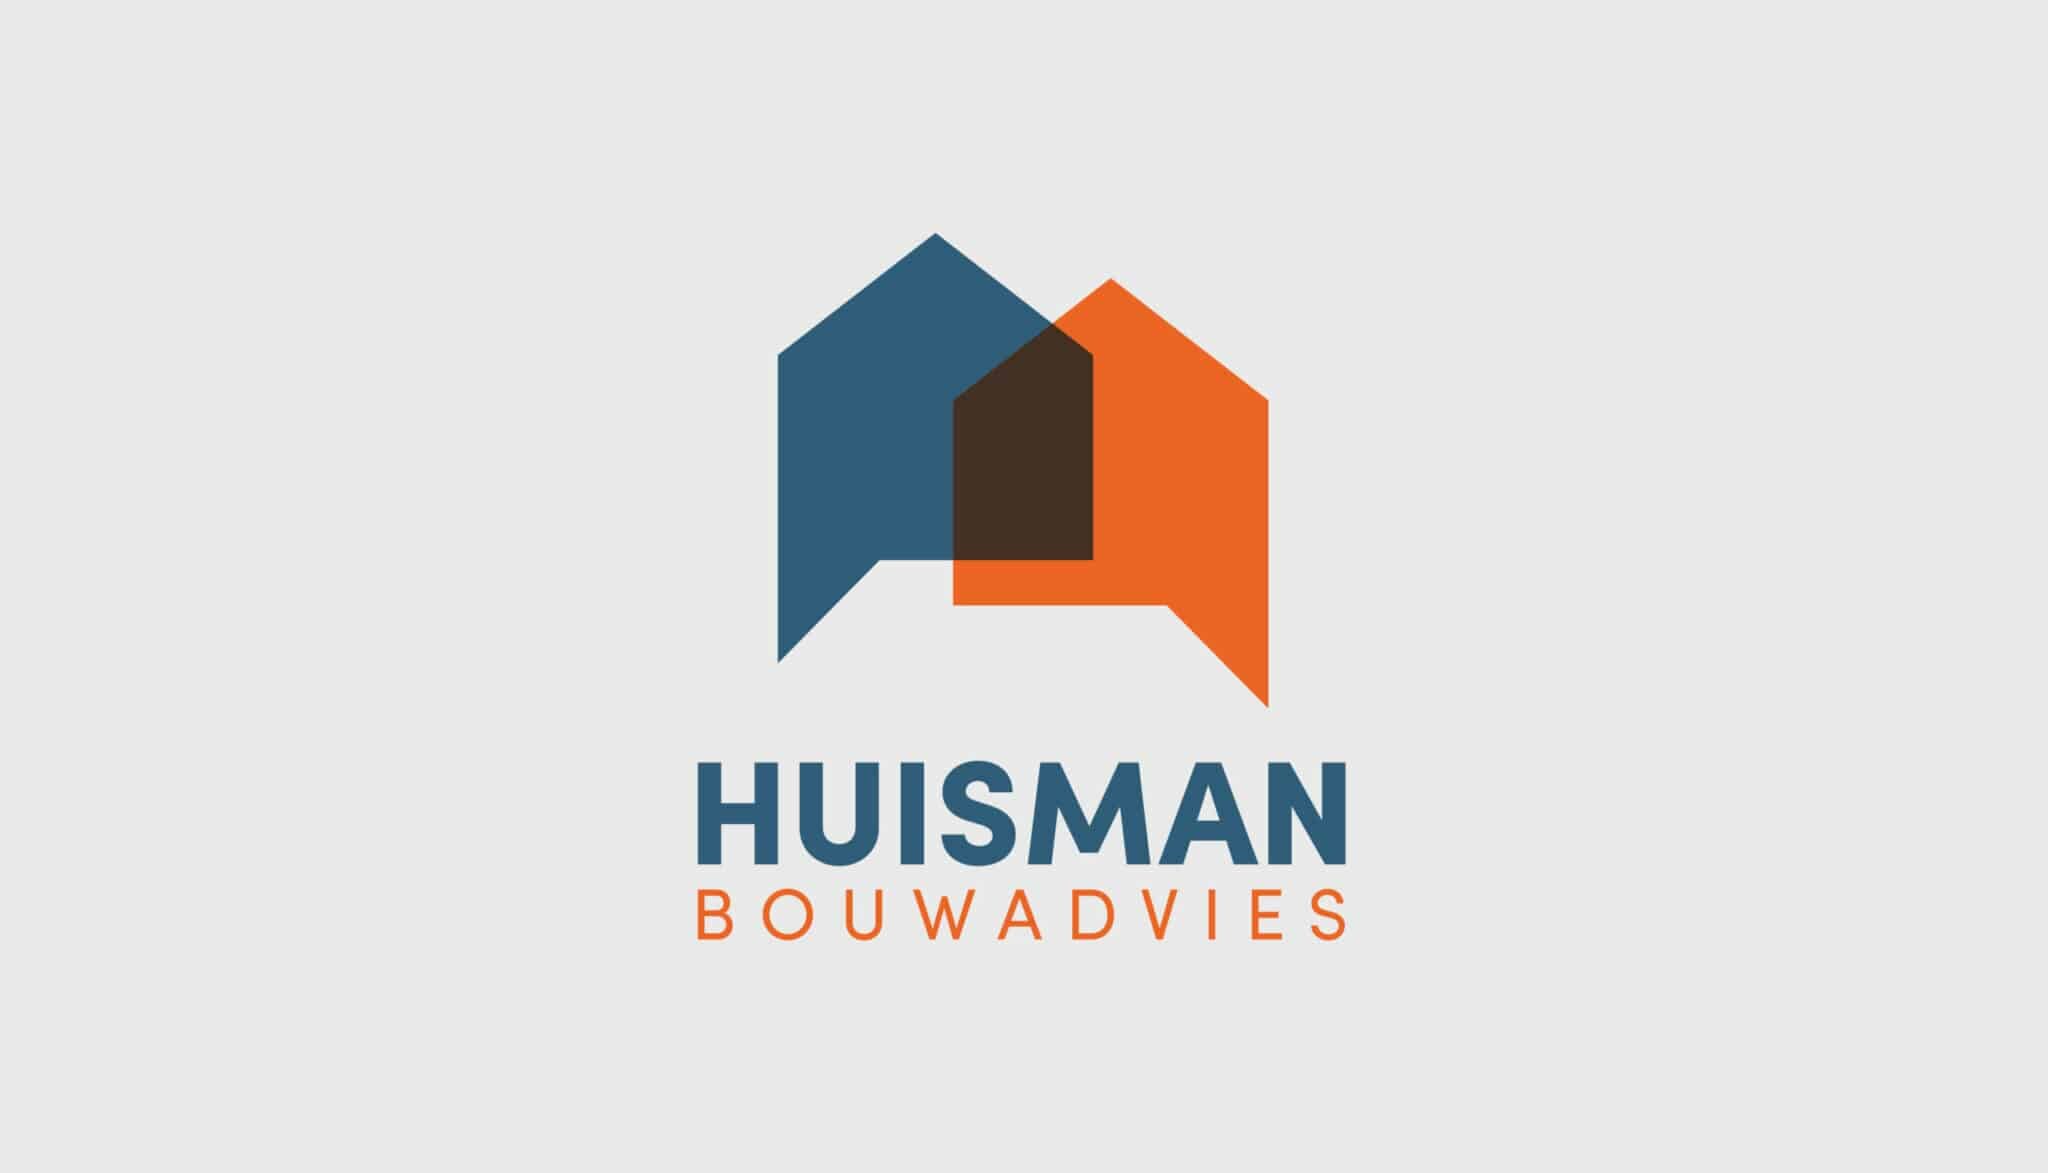 HuismanBouwadvies Profil skaliert